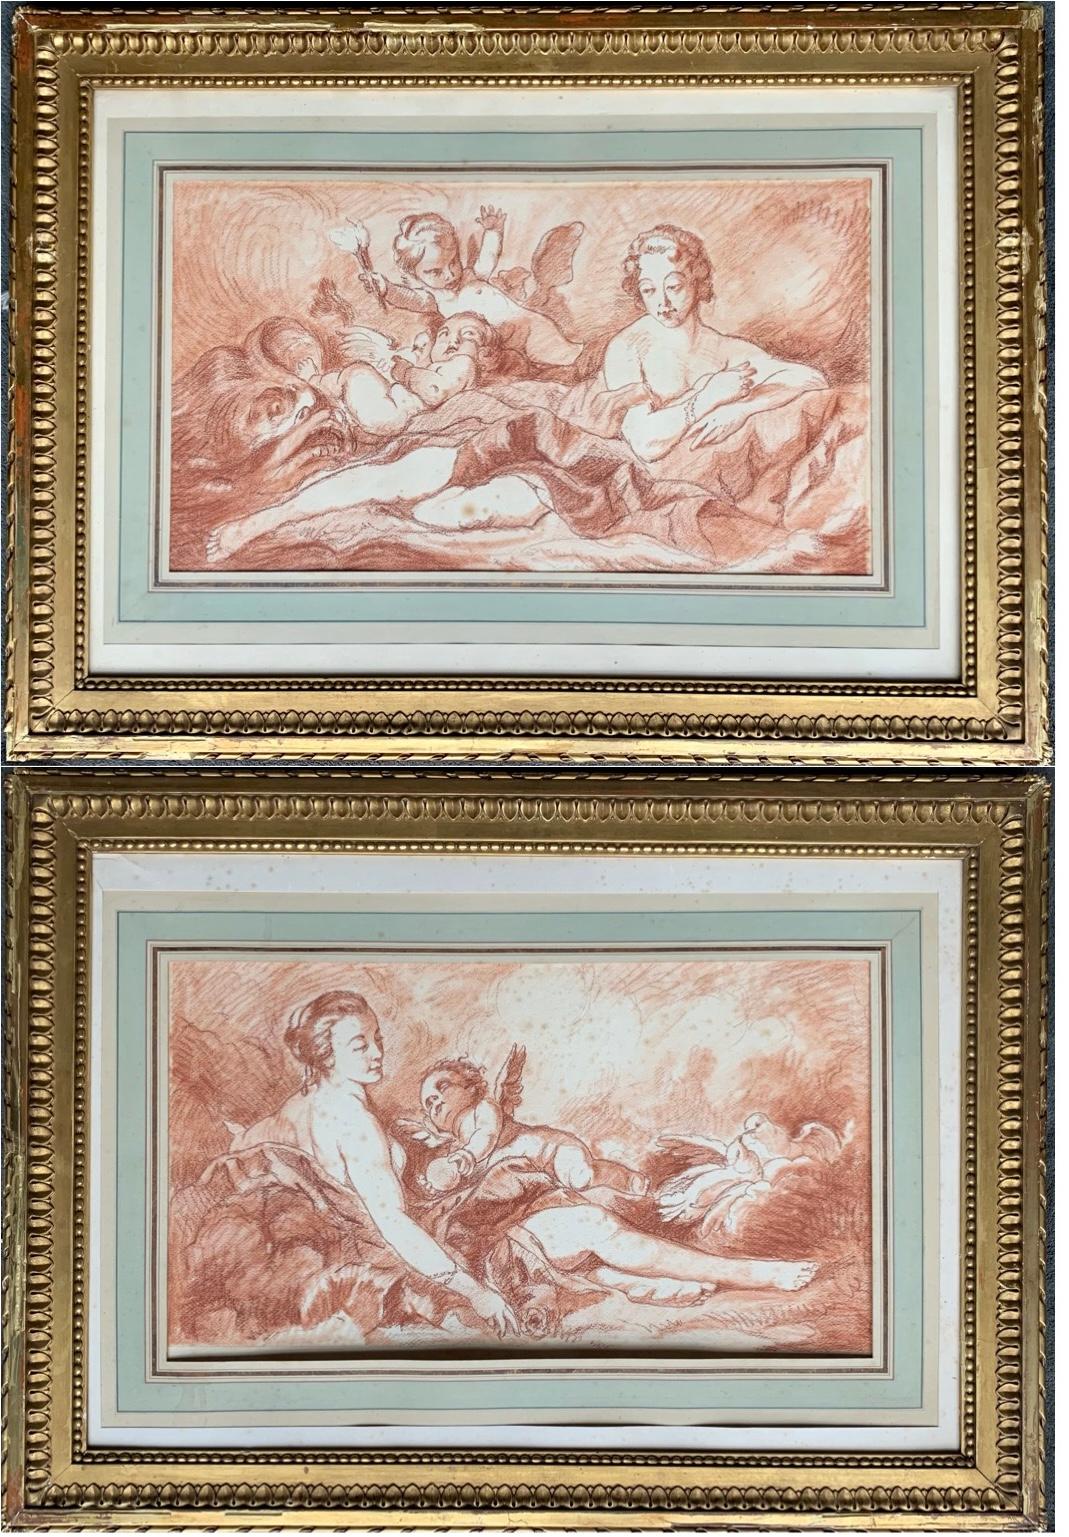 François Boucher Figurative Art - Large Pair 18th century French Rococo Drawings - Figurative Putti Romantic Venus